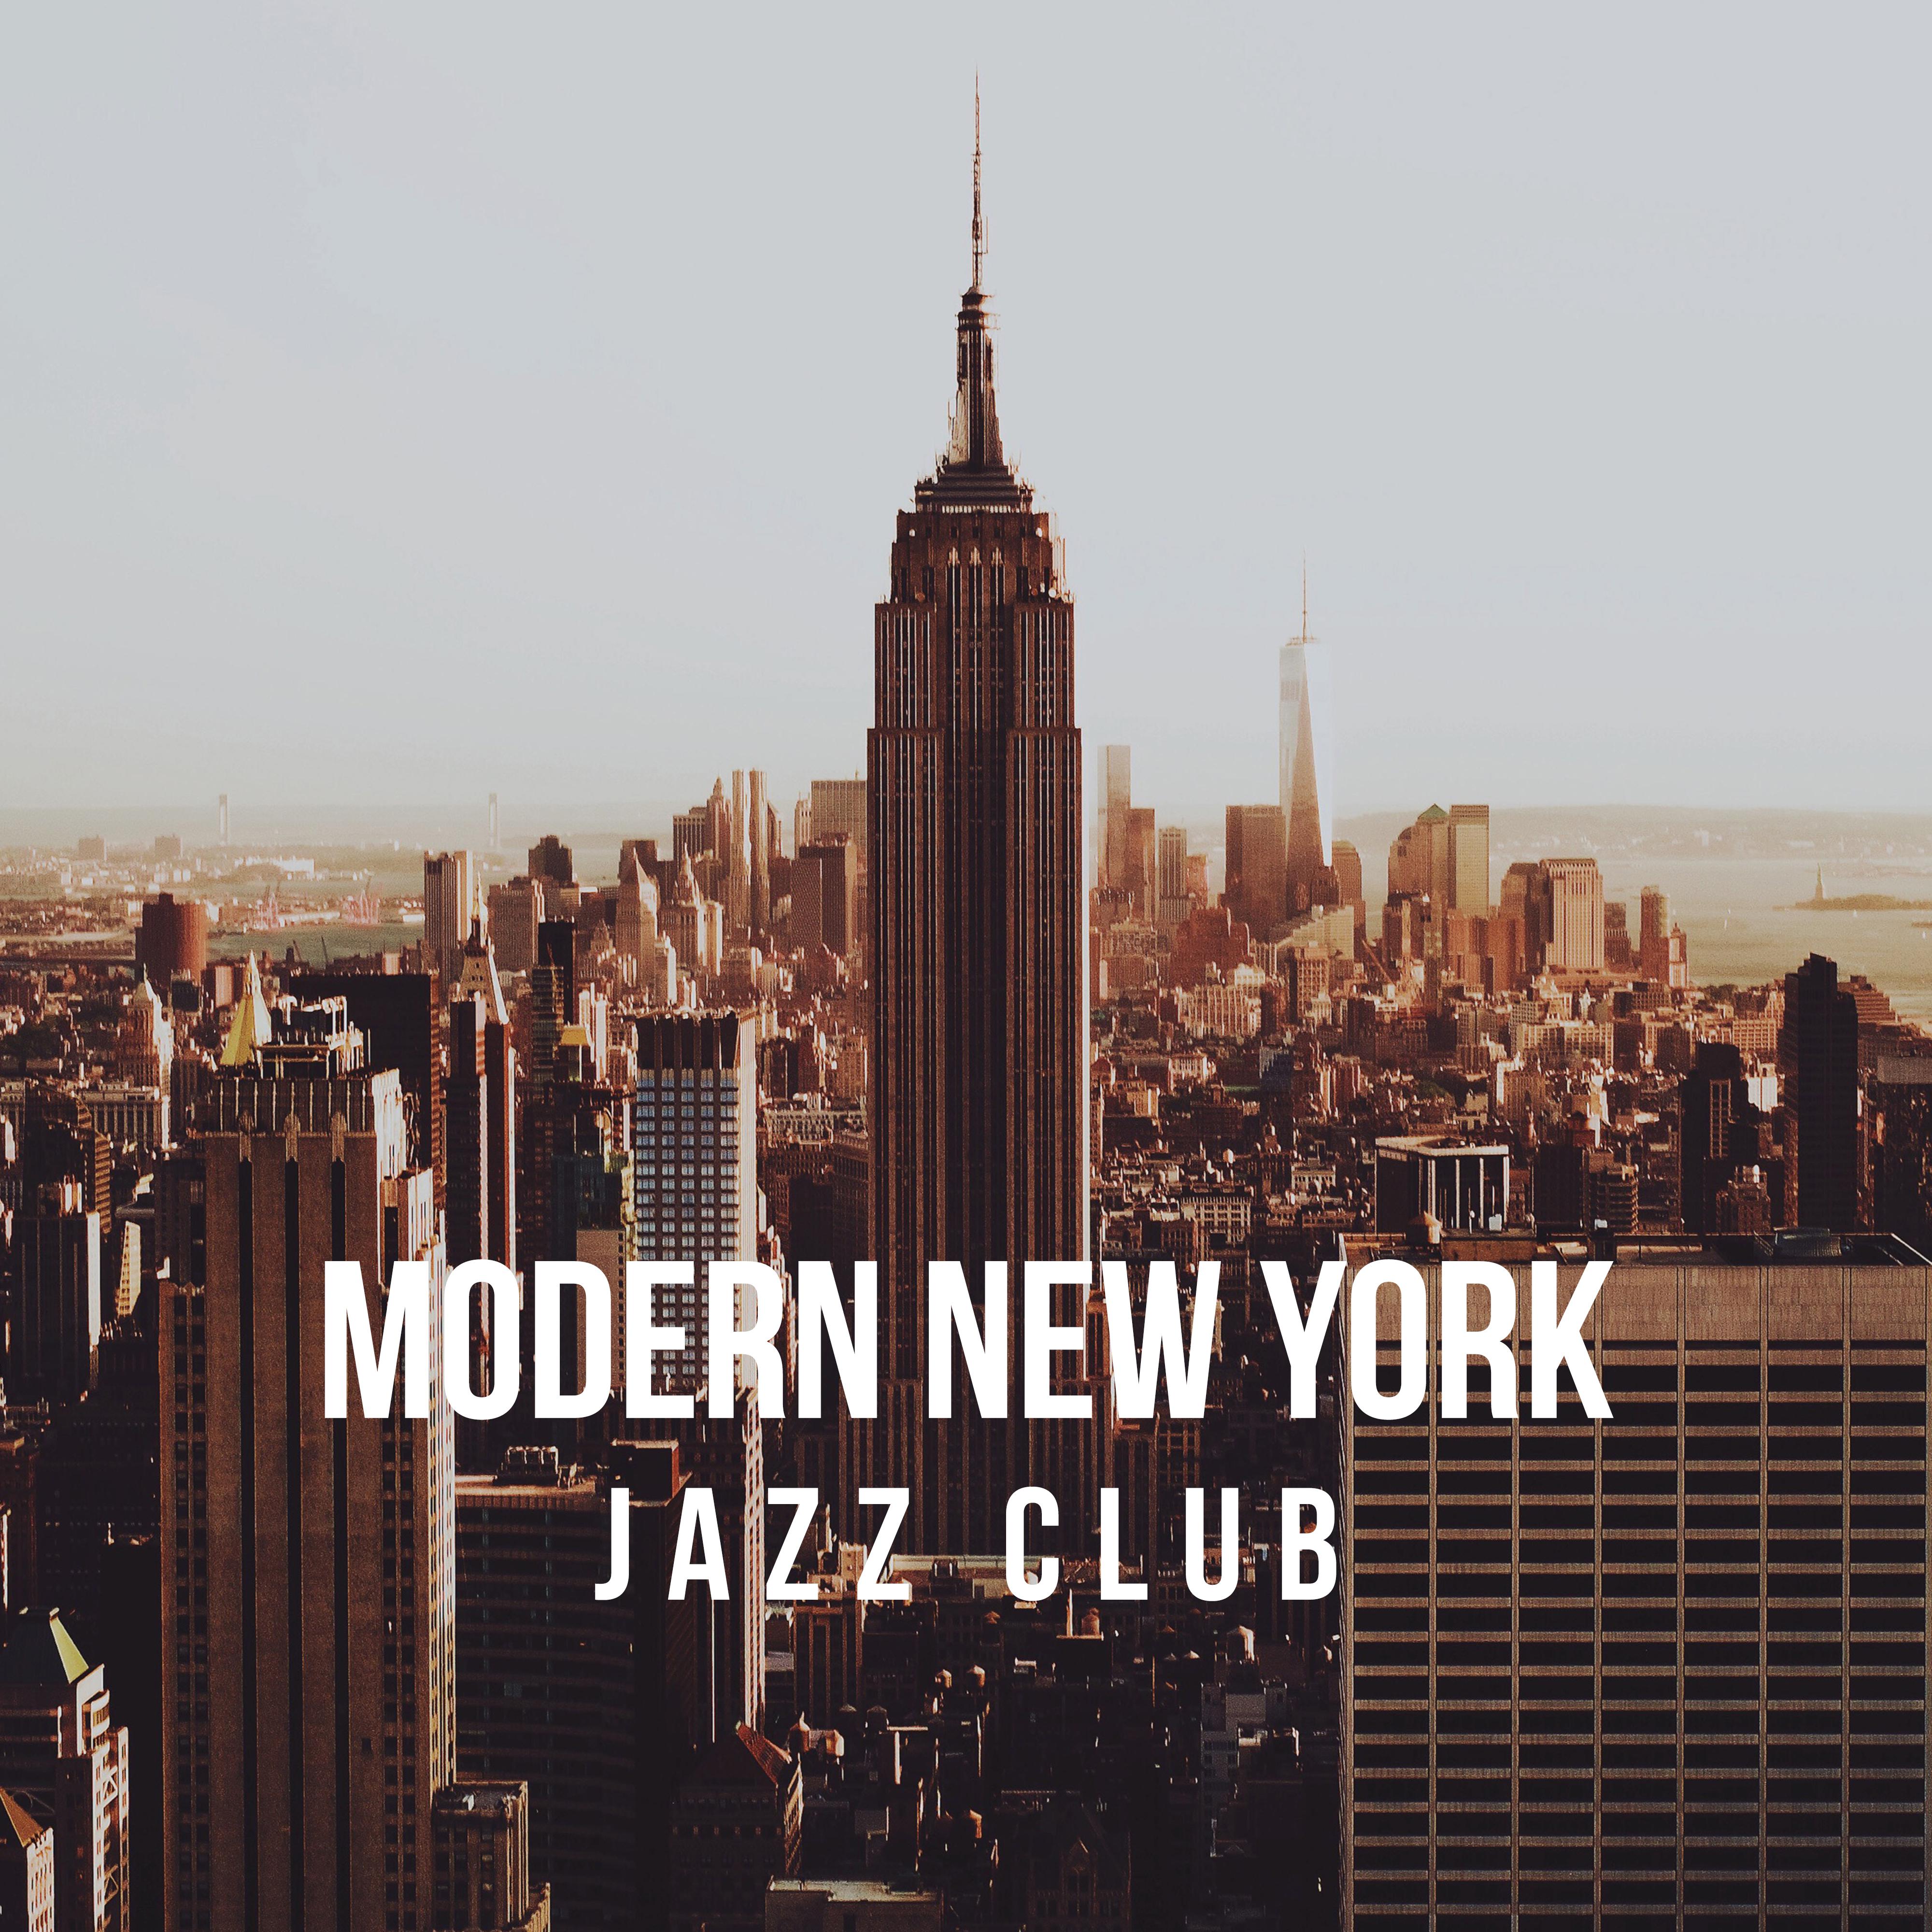 Modern New York Jazz Club: 2019 Instrumental Jazz Music Collection for Underground Jazz Club, Piano Pub & Bar, Modern Instruments & Melodies with Vintage Soul